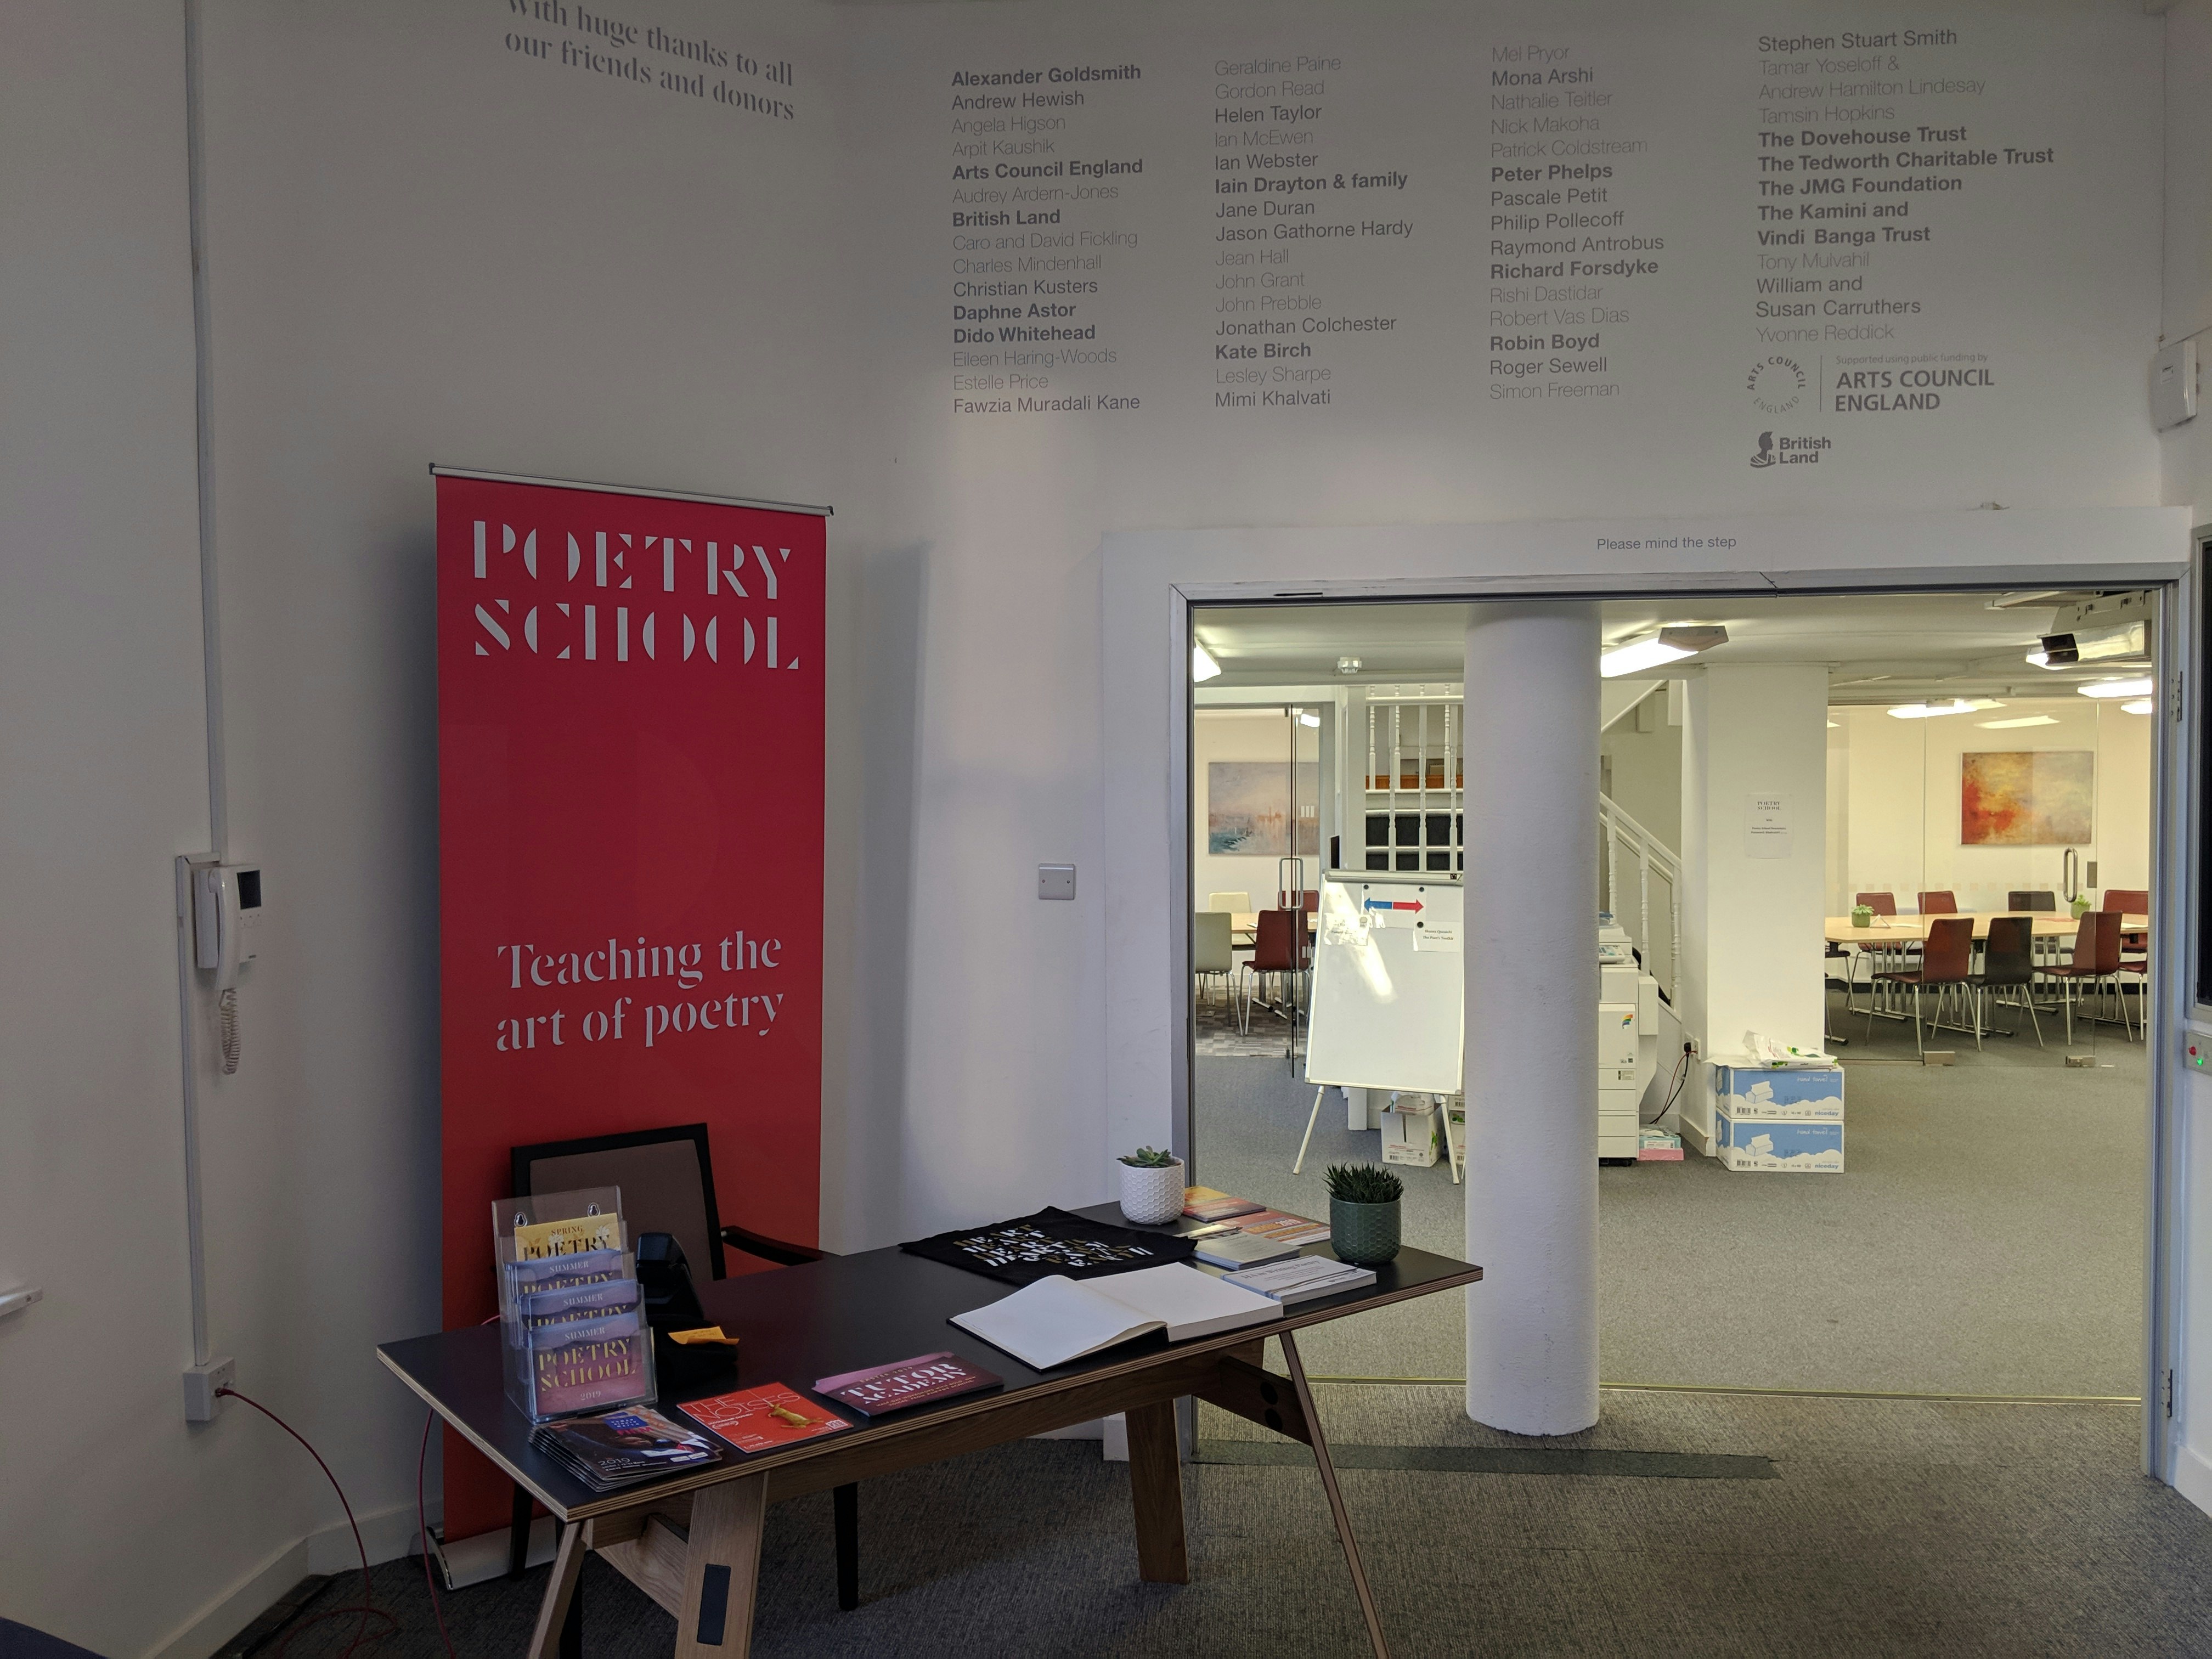 Poetry School - Red Room image 2